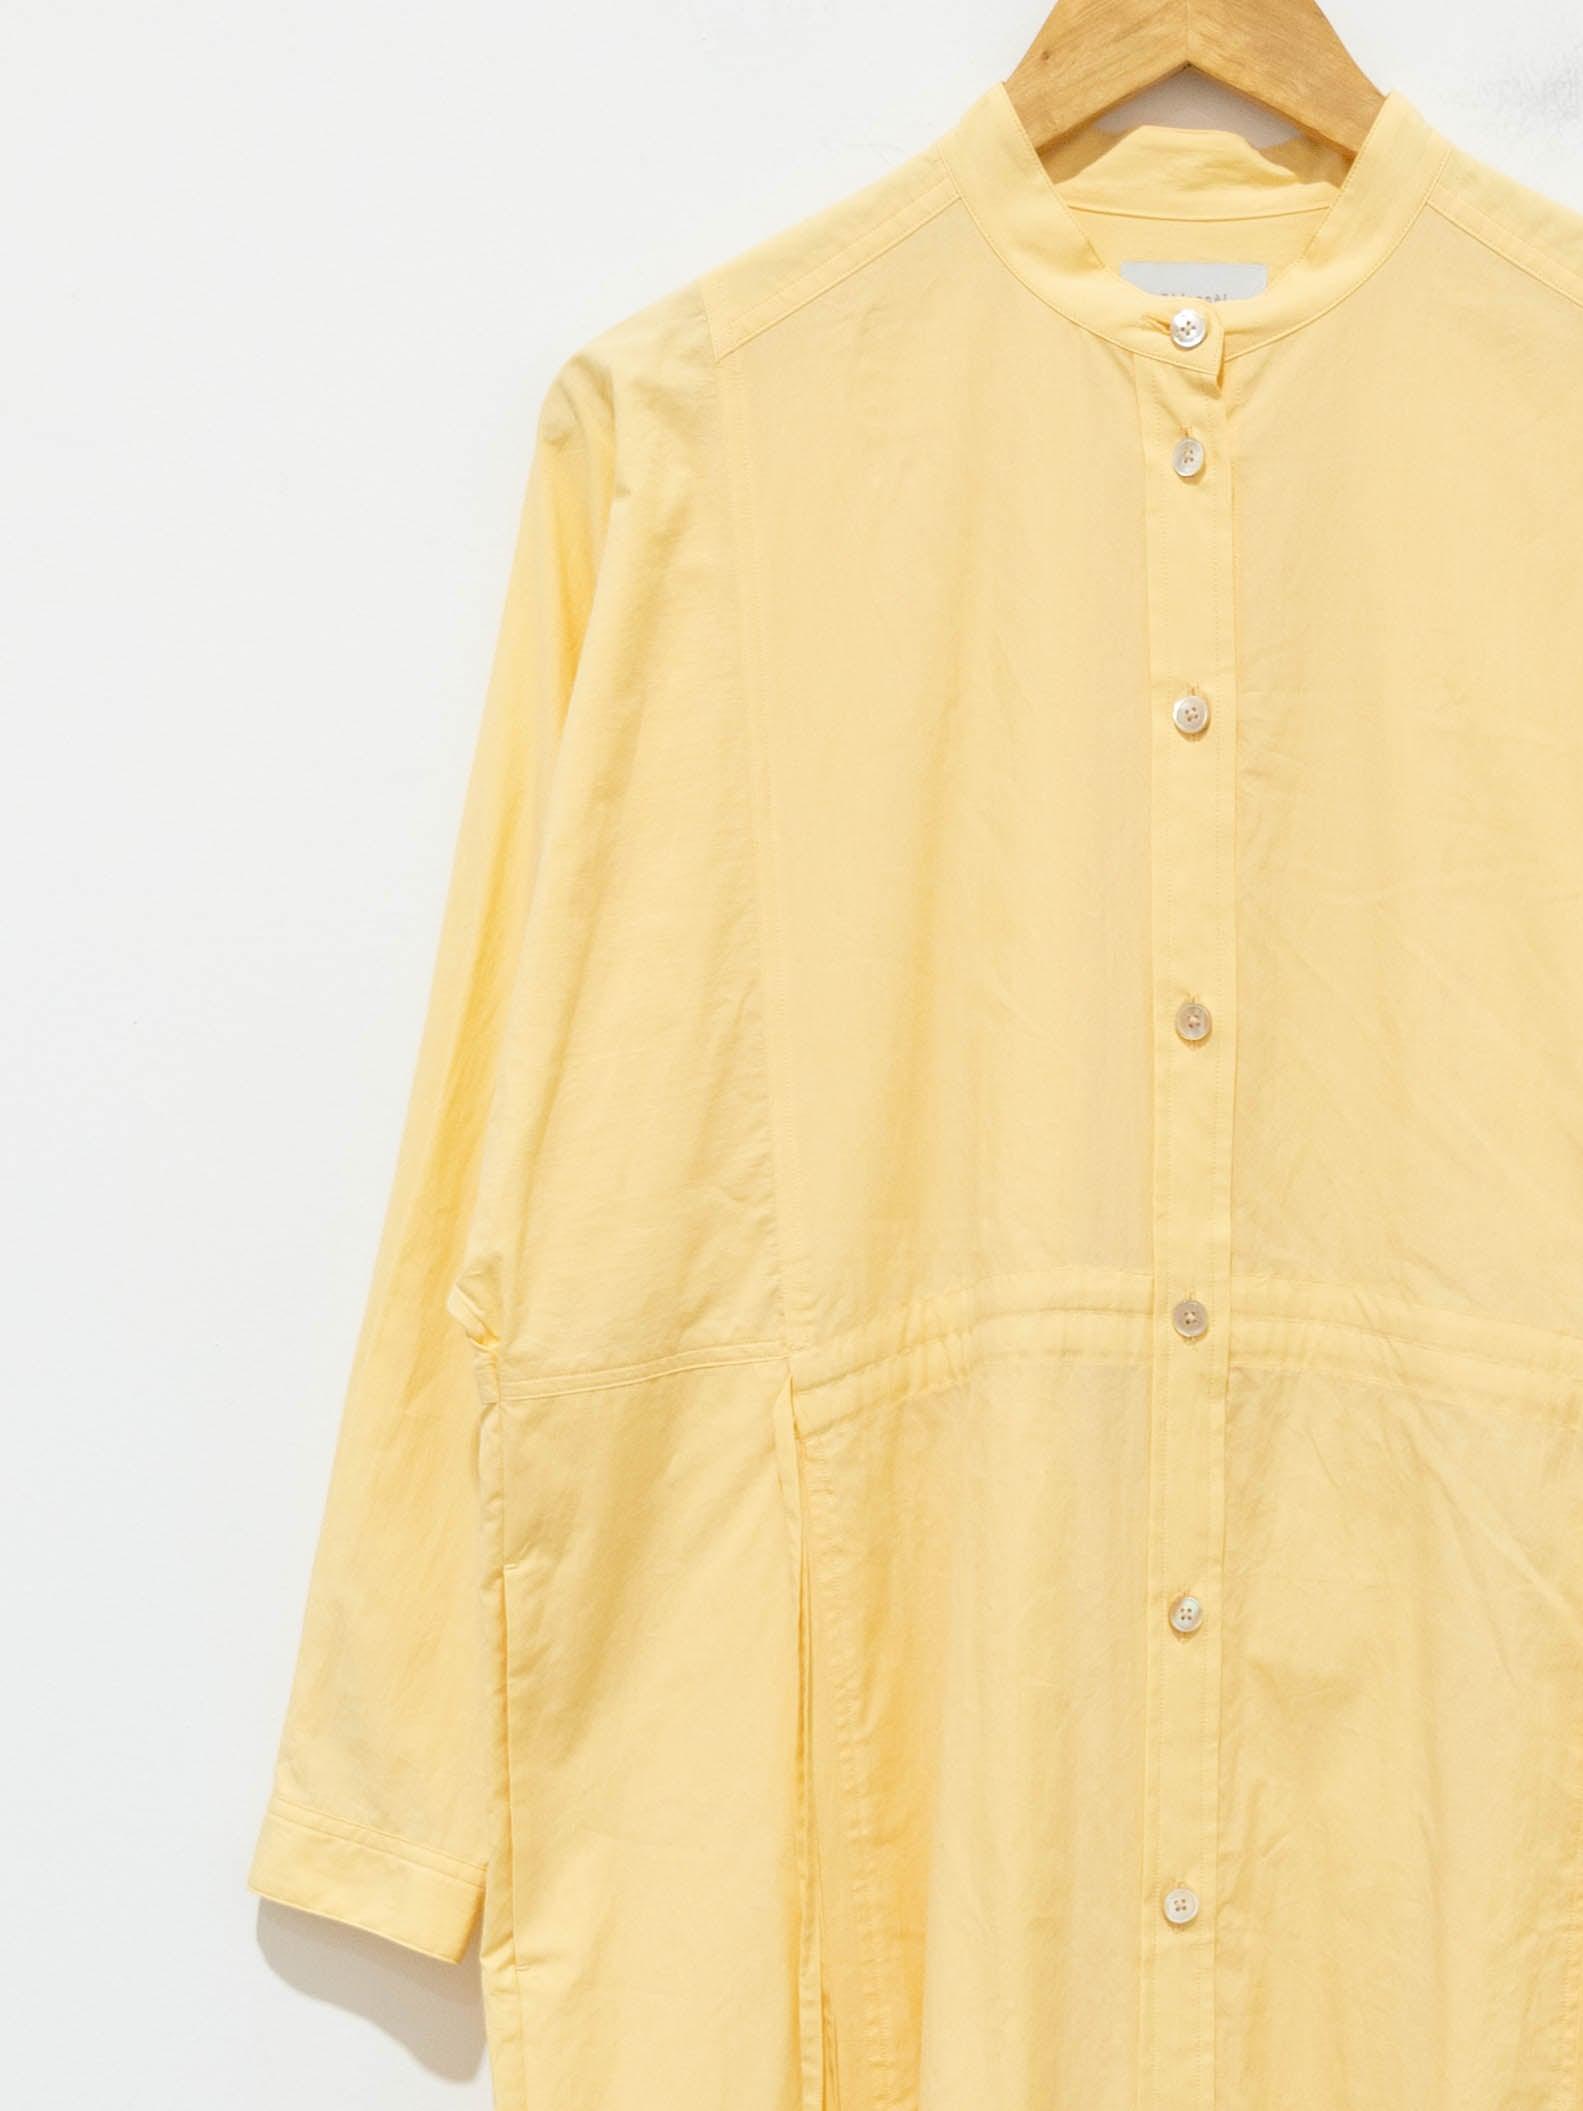 Namu Shop - Phlannel Cotton Paper Cloth Shirt Dress - Pale Yellow